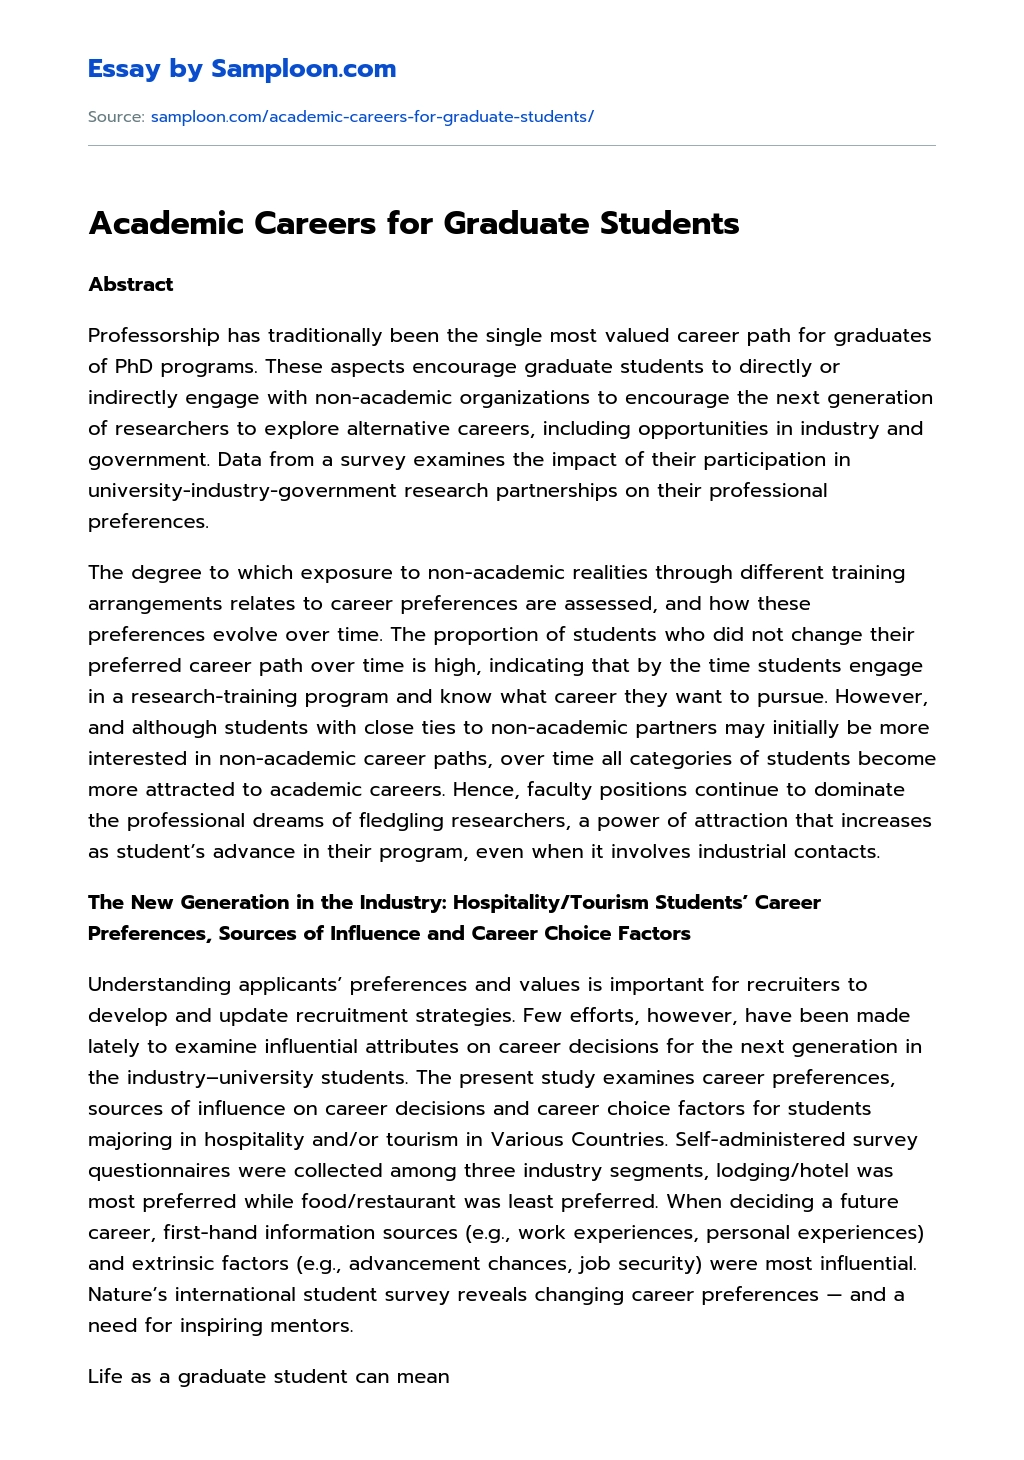 Academic Careers for Graduate Students essay